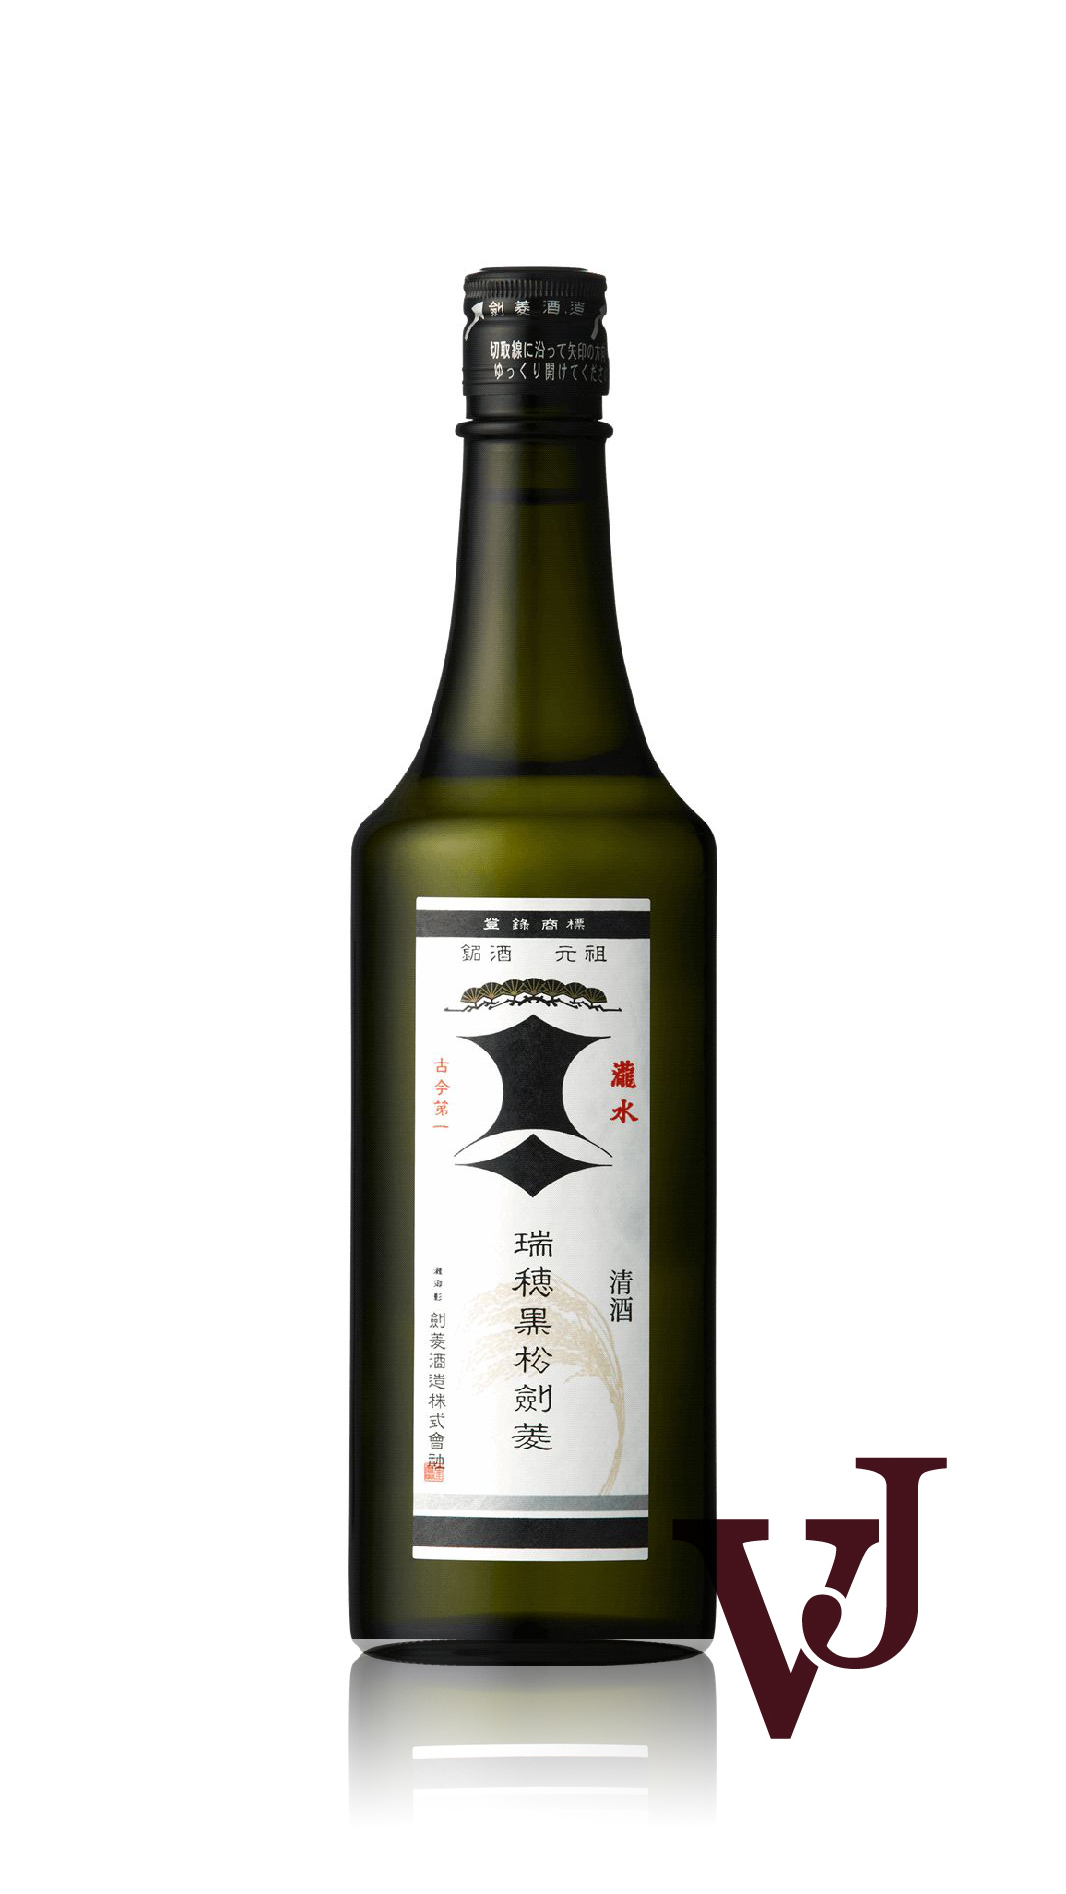 Sake - Kenbishi Mizuho artikel nummer 7124301 från producenten Kenbishi Sake Brewery från området Japan